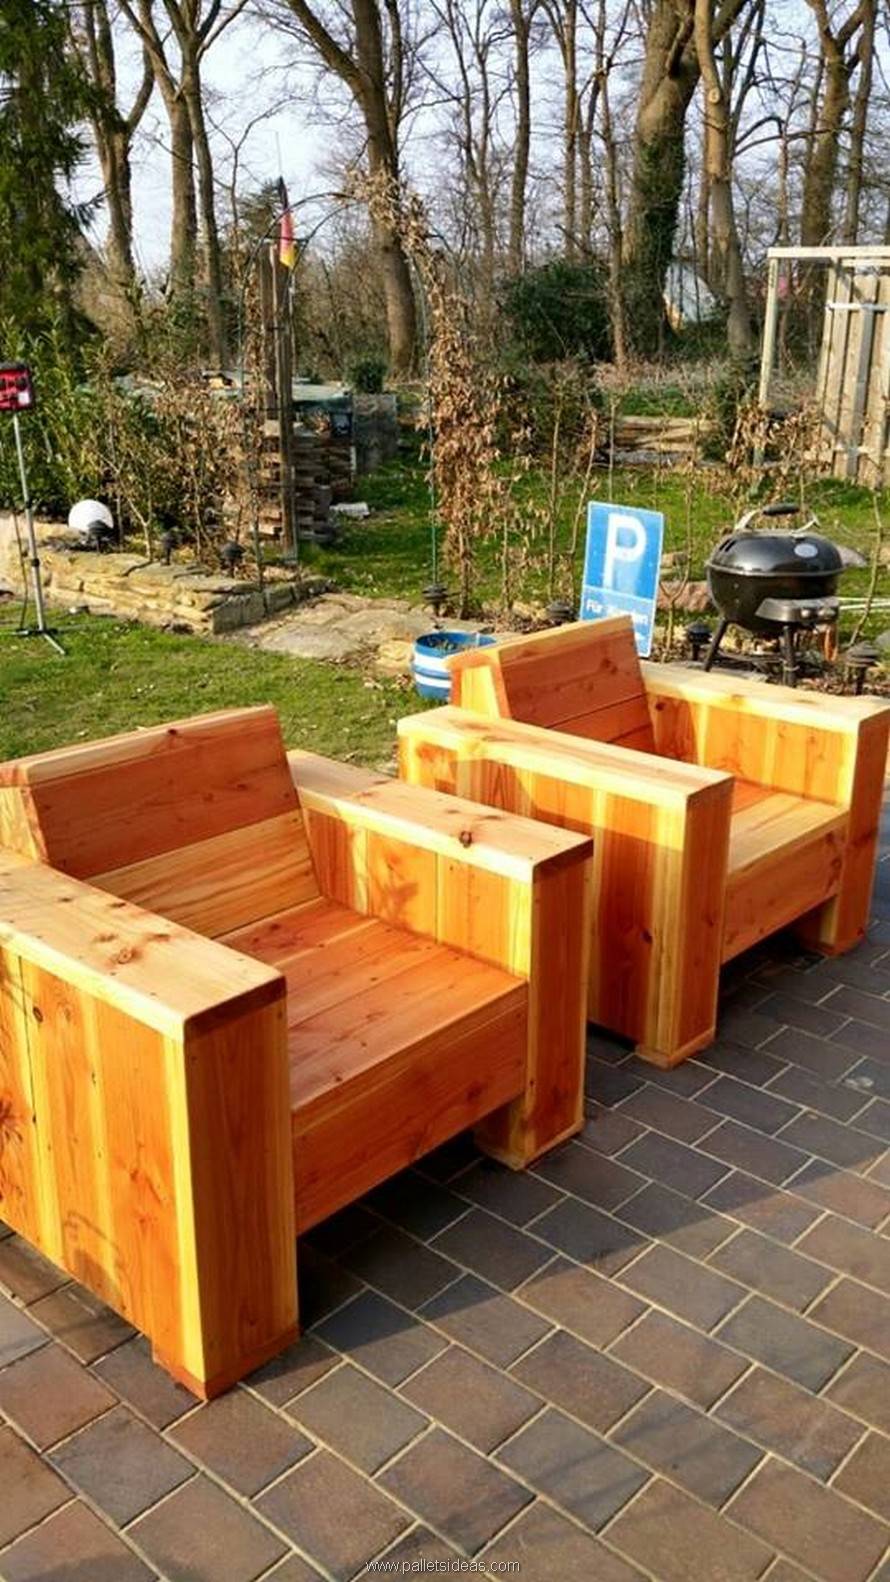 Wooden Outdoor Furniture